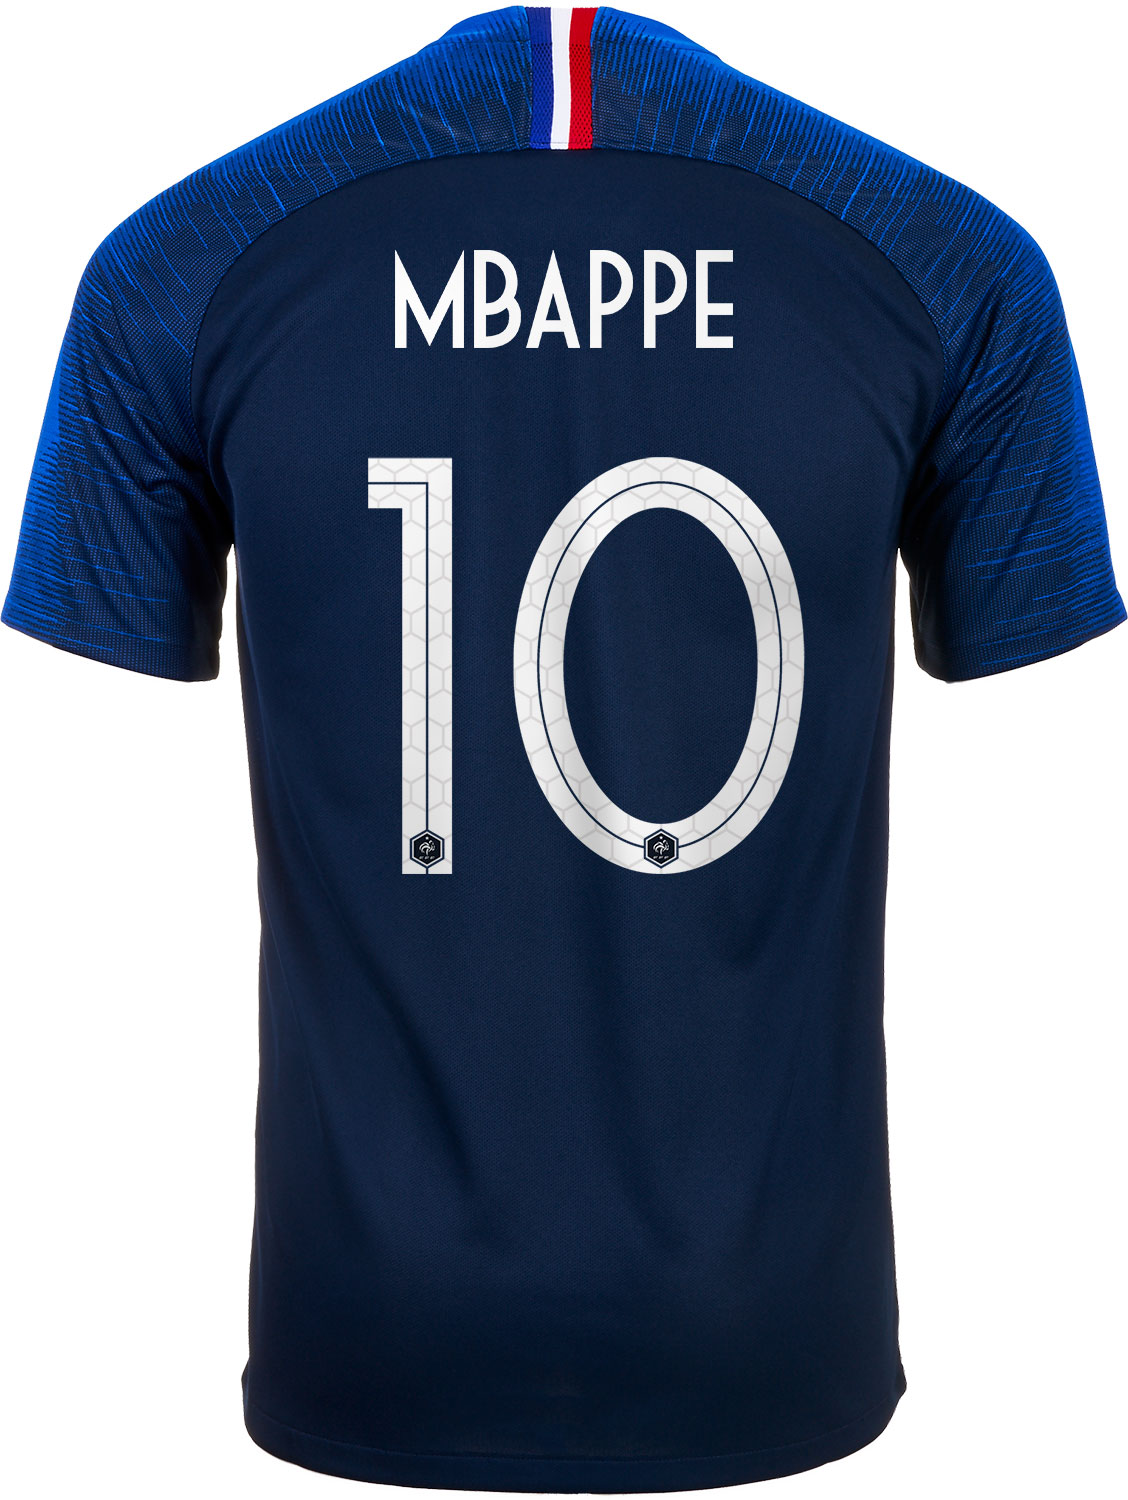 mbappe shirt france